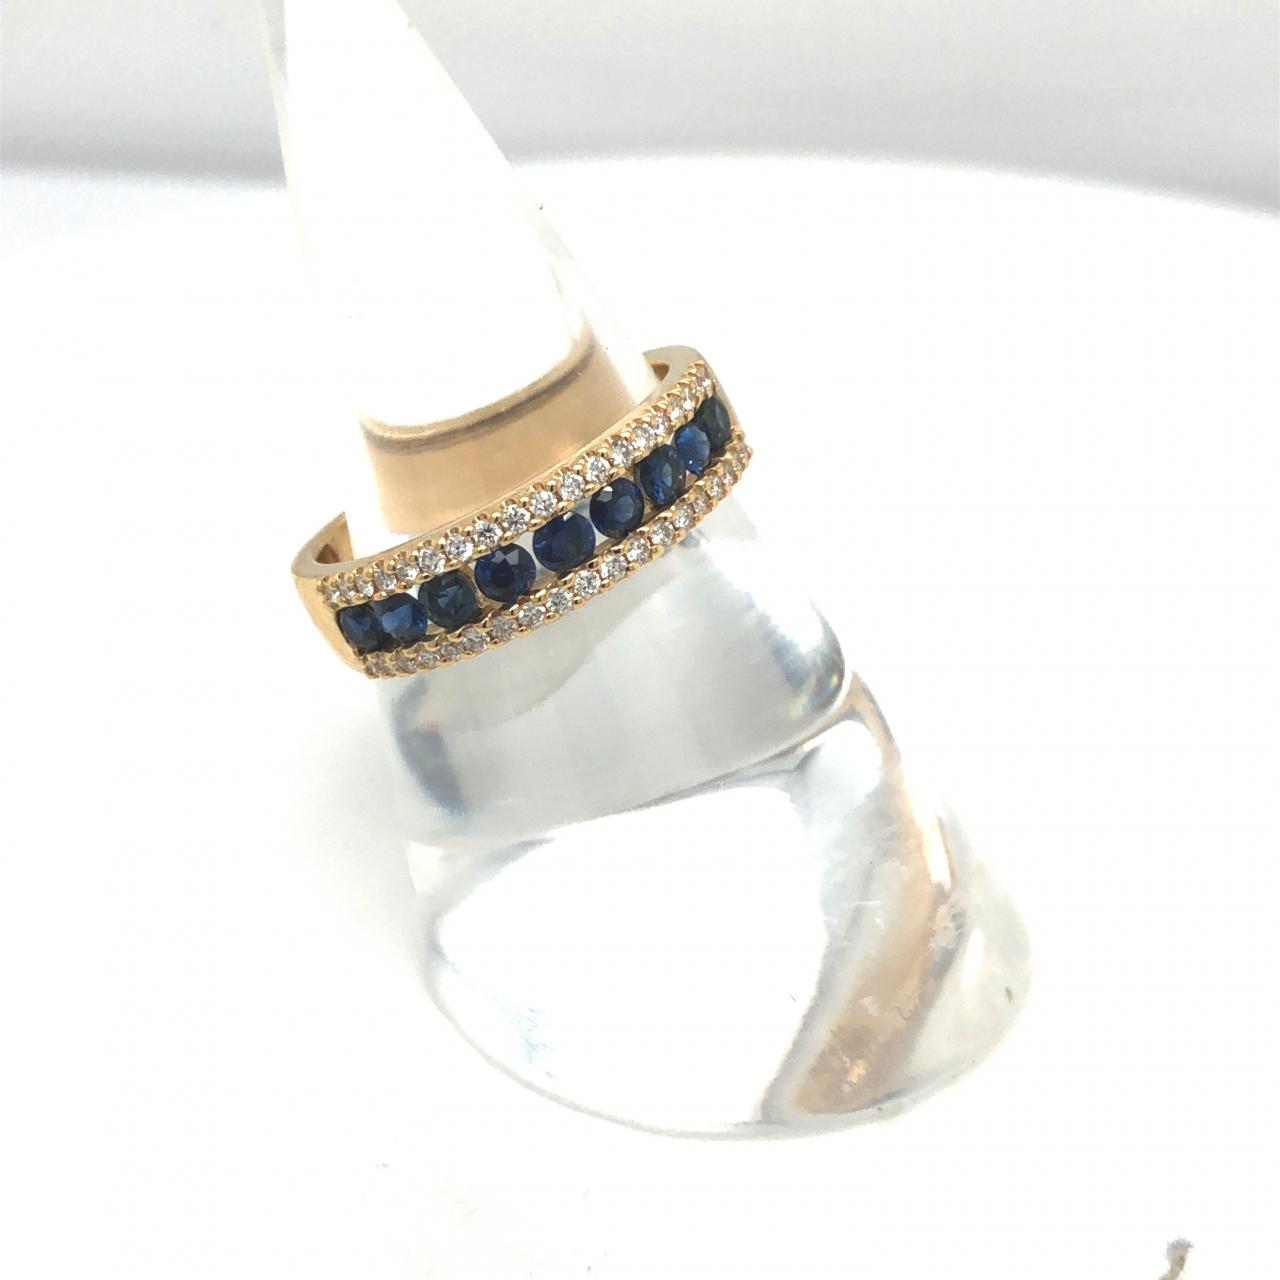 Mazarine Blue Sapphire ring